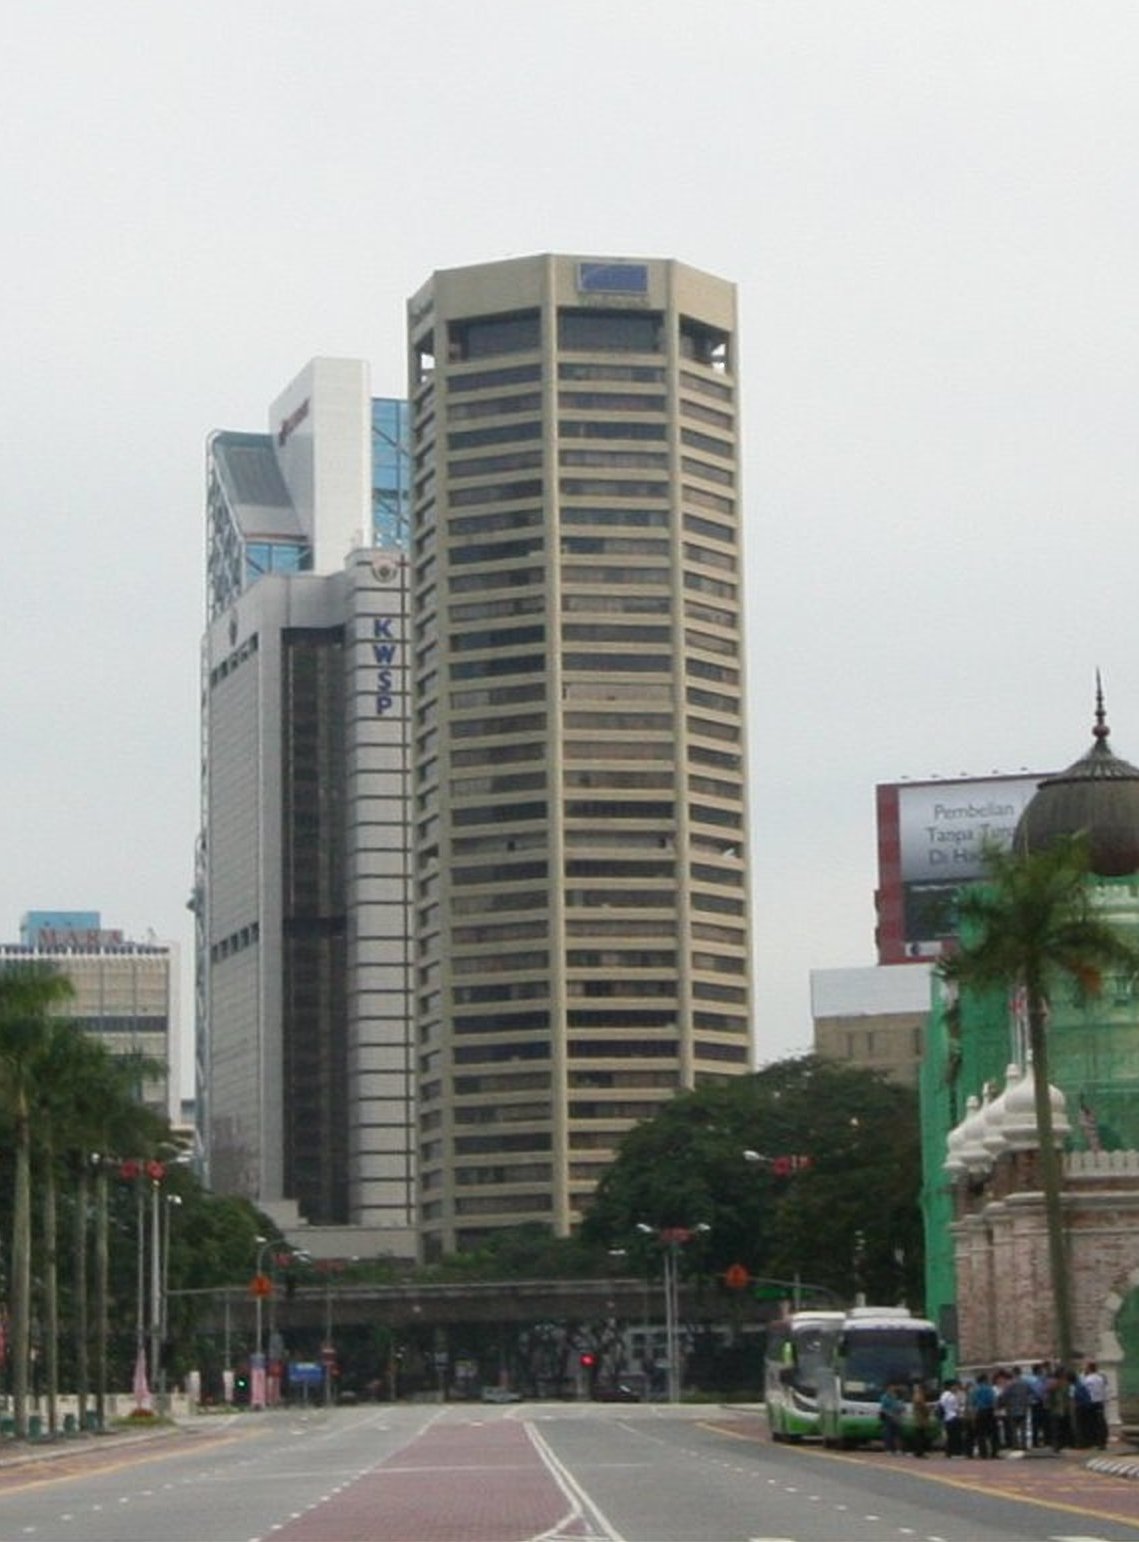 The 35-storey Menera Tun Razak was completed in 1983.